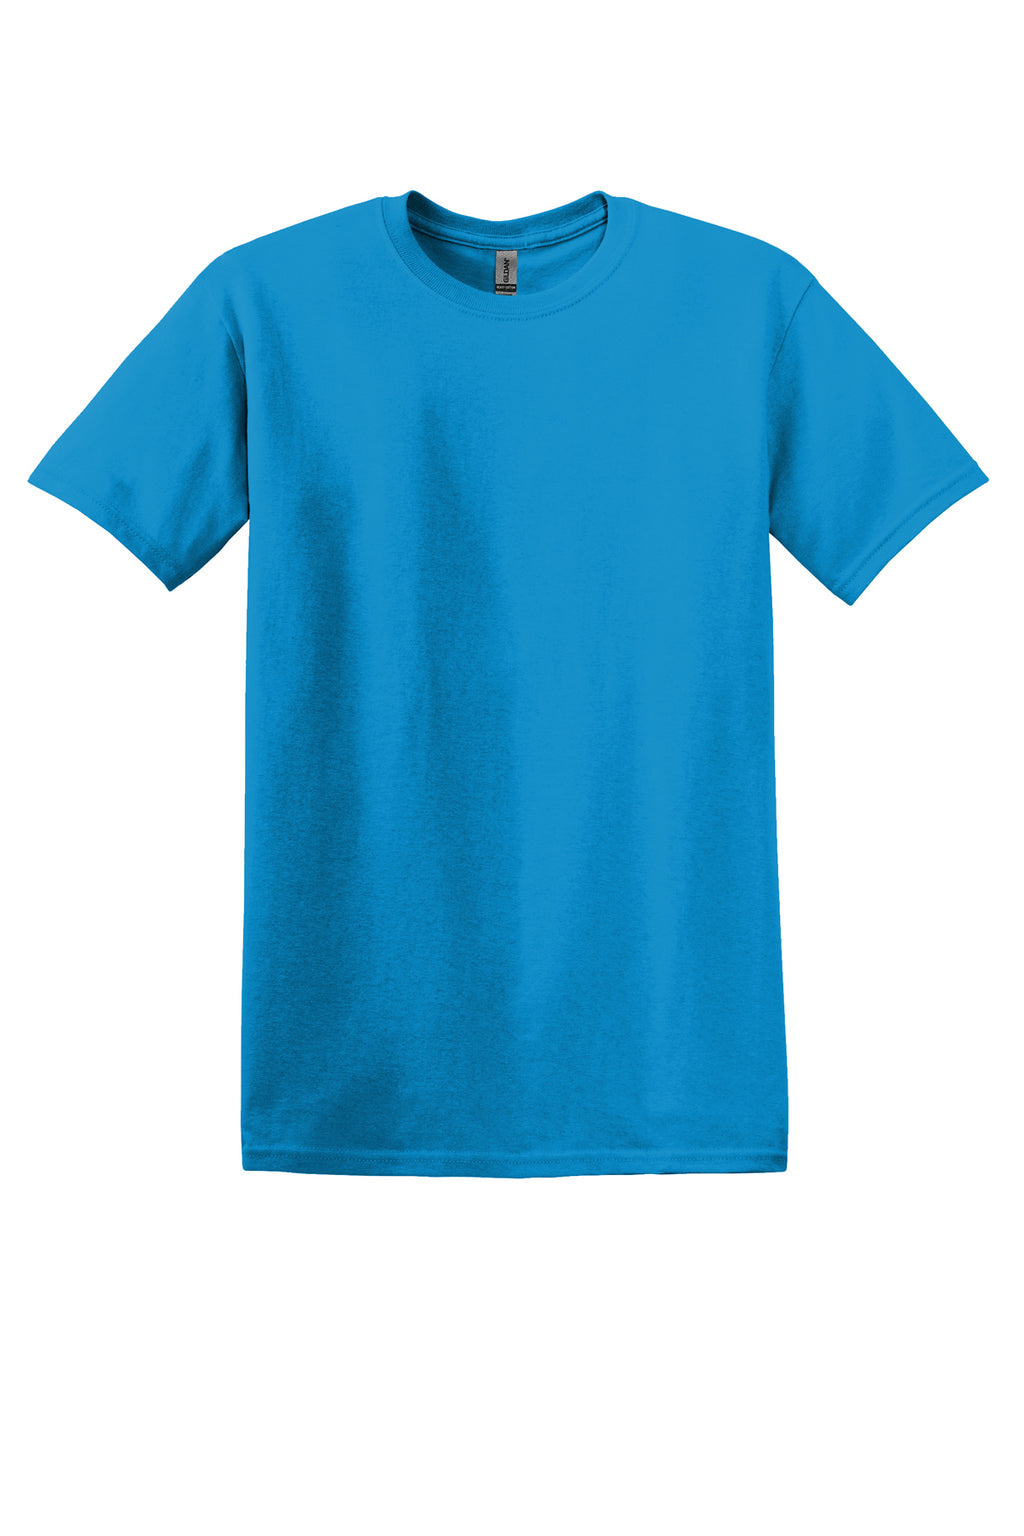 Gildan Mens/Unisex S/S Sleeve Shirts Sapphire